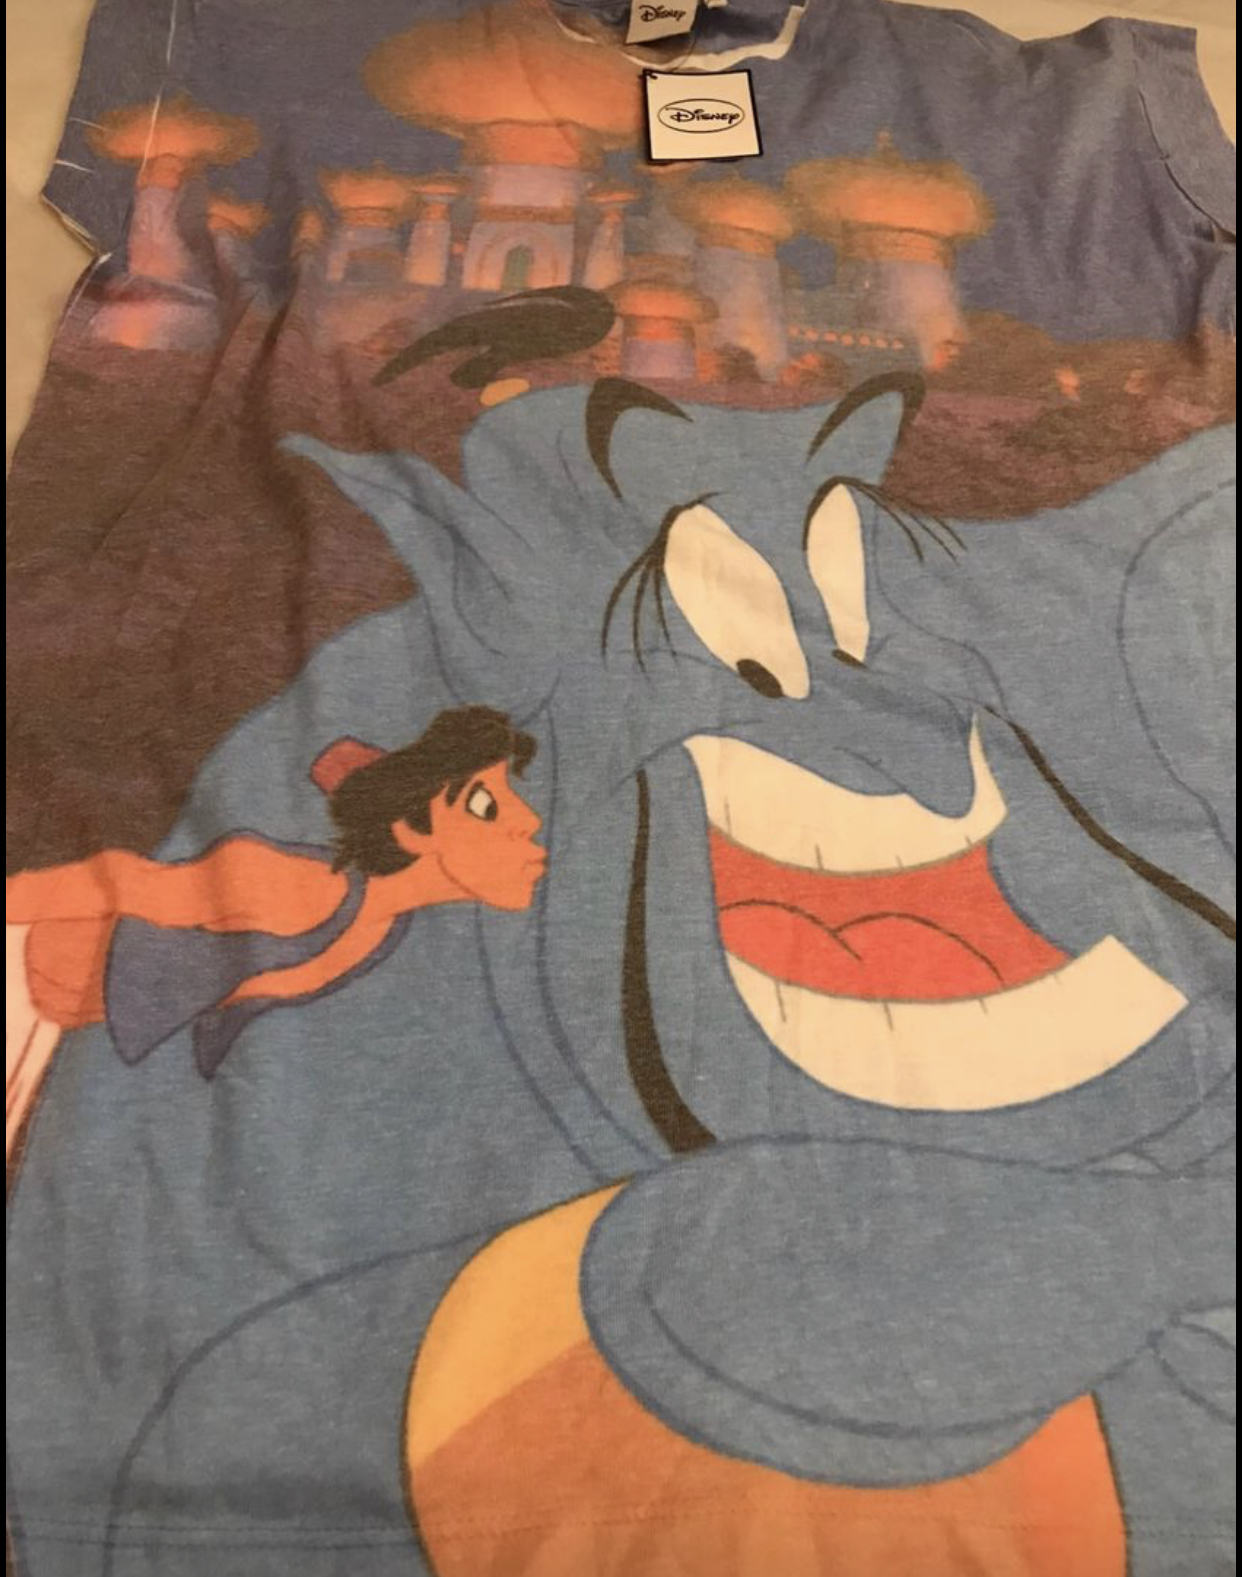 Disney Aladdin shirt